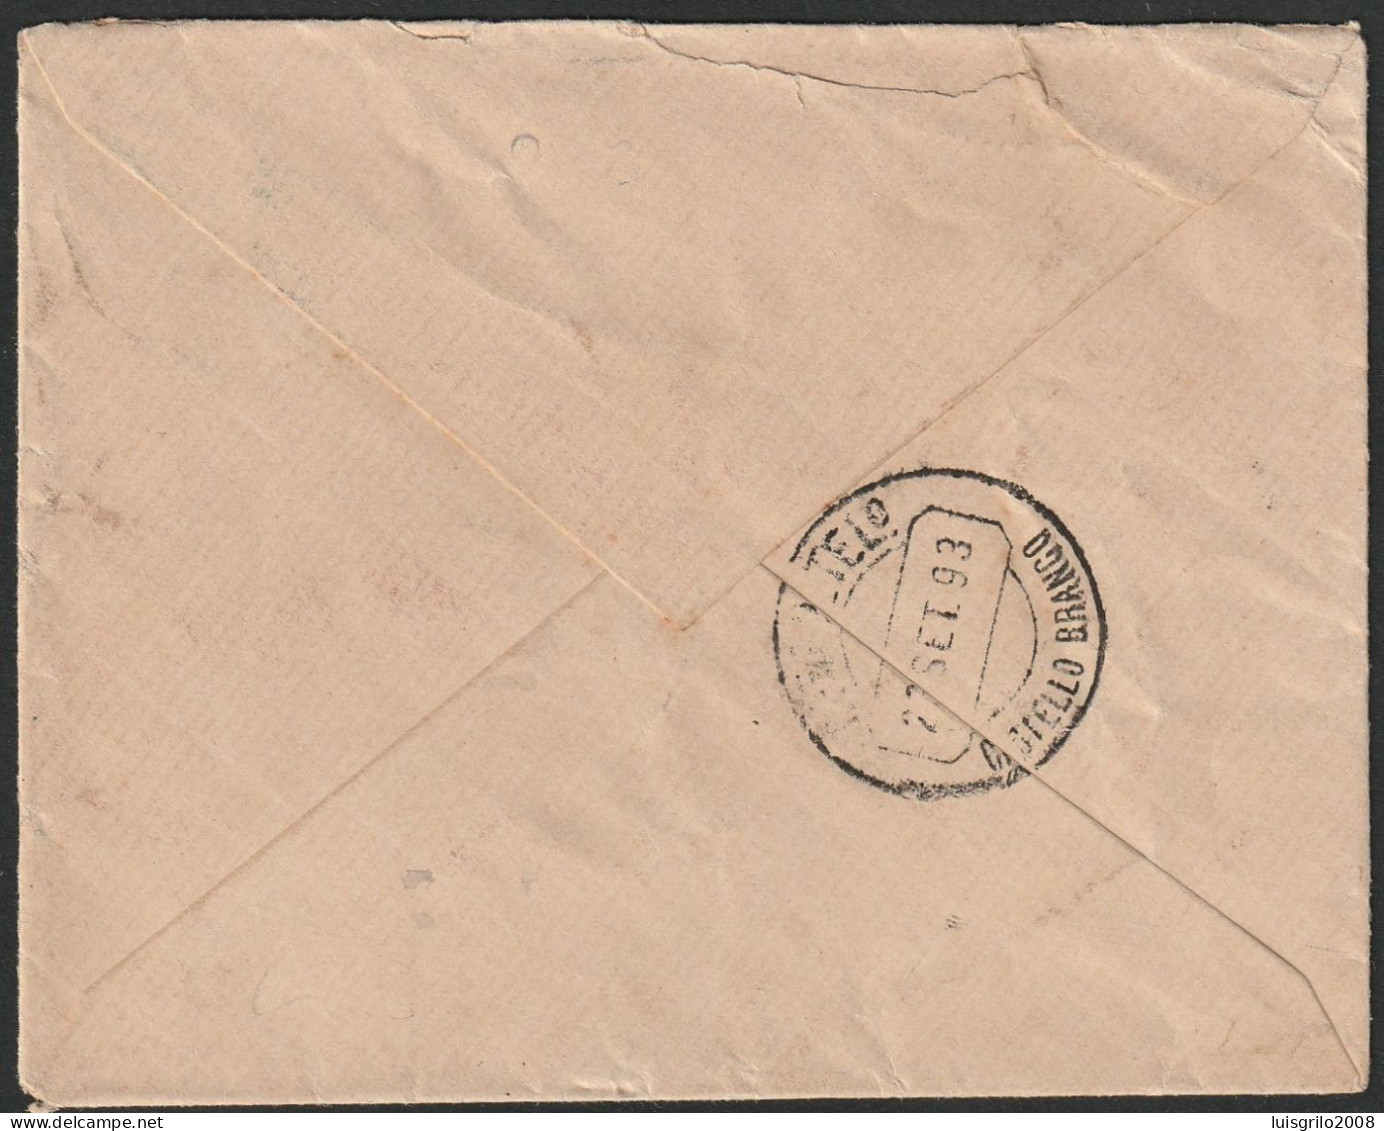 Cover - Lisboa To Castelo Branco -|- Postmark - Lisboa. 1893 - Lettres & Documents